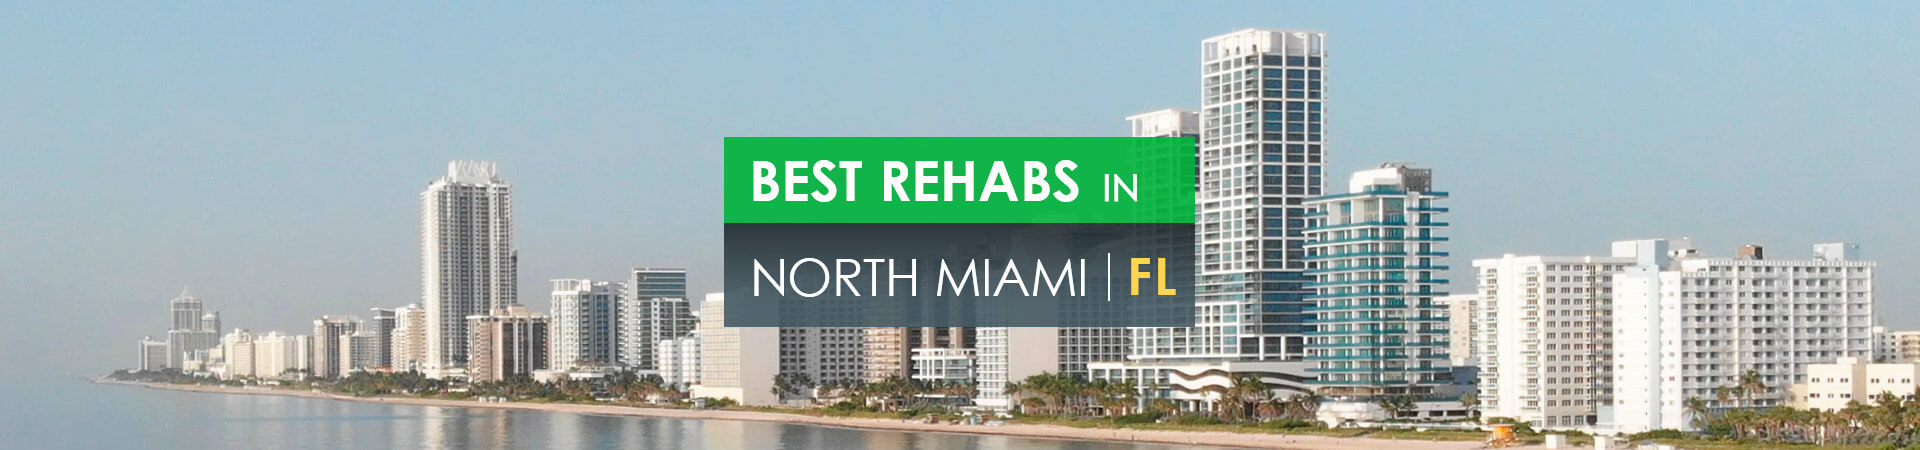 Best rehabs in North Miami, FL